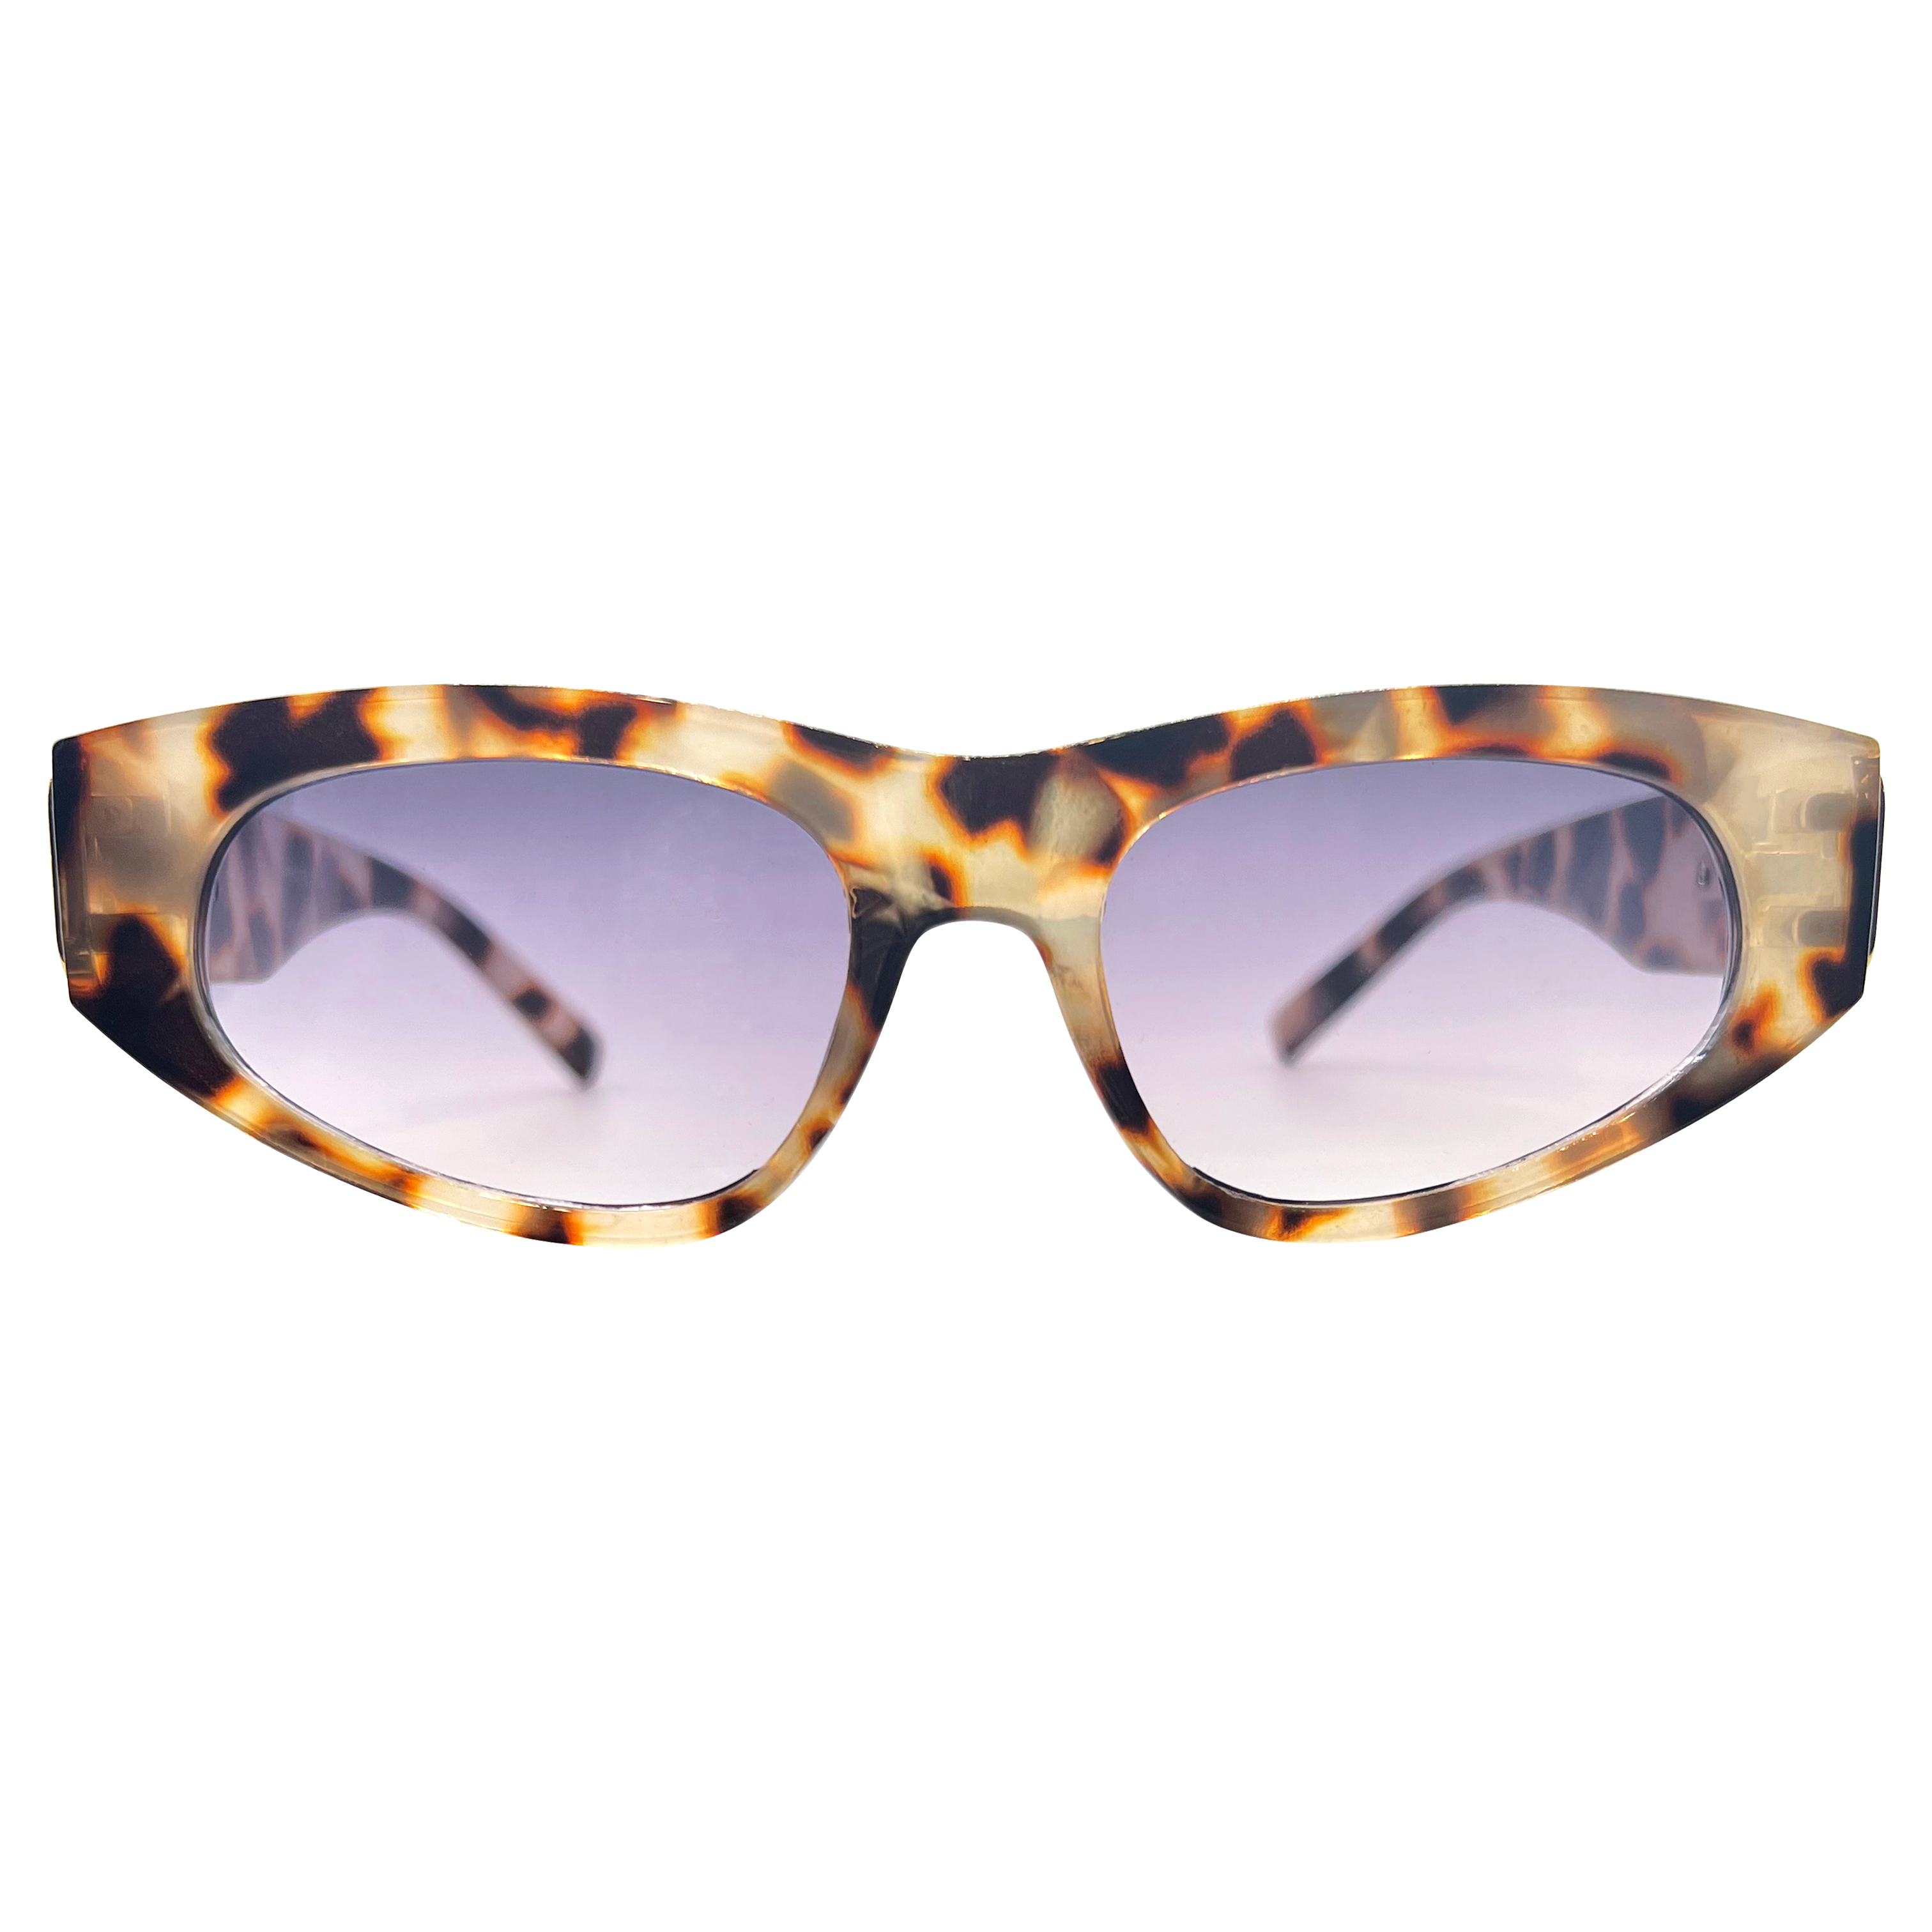 BOWLS Calico Cat-Eye Sunglasses